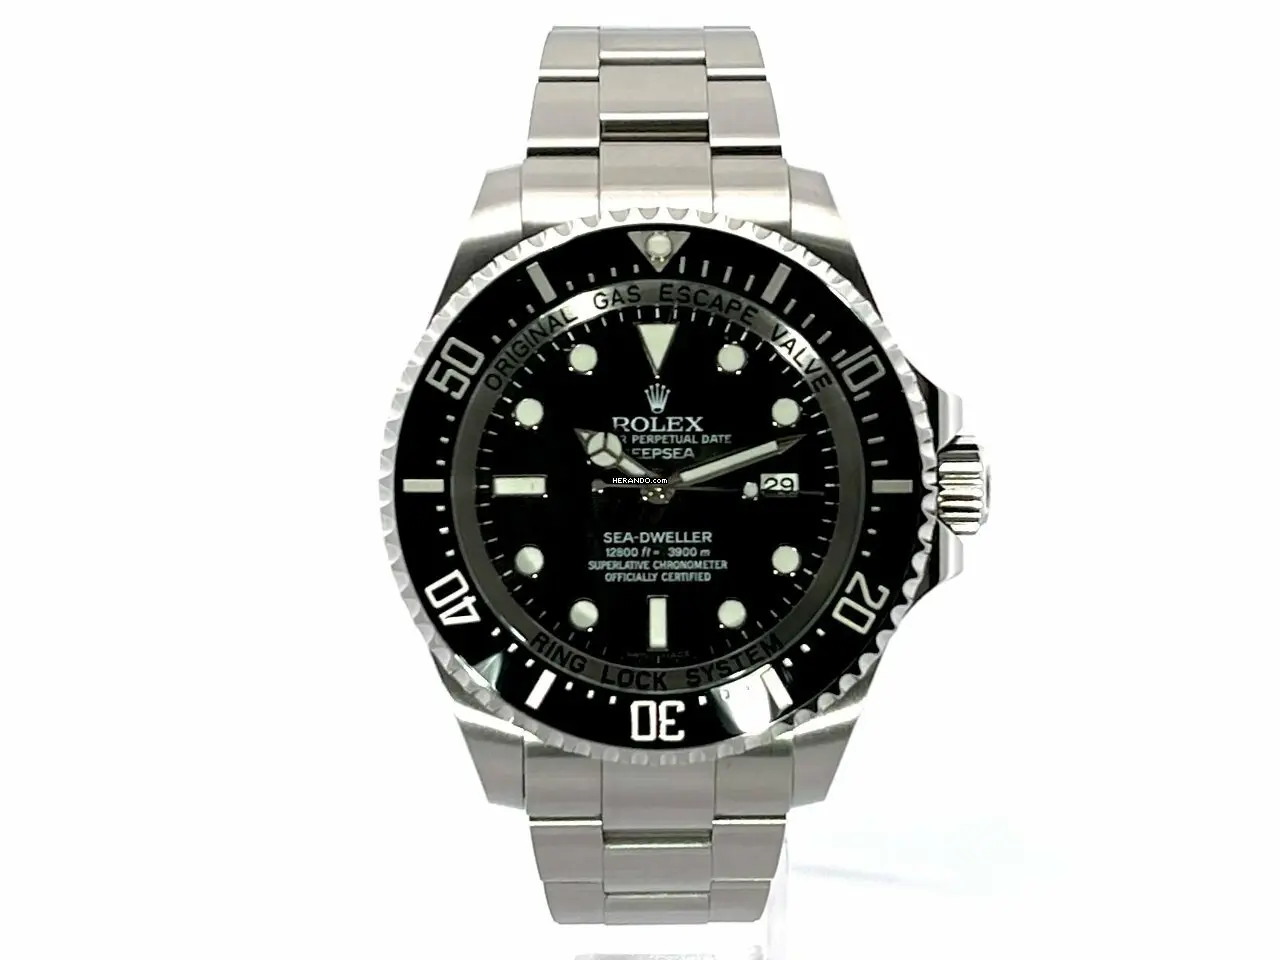 watches-308254-26035112-xwyh1iv0qba14wvsw70lhkog-ExtraLarge.webp